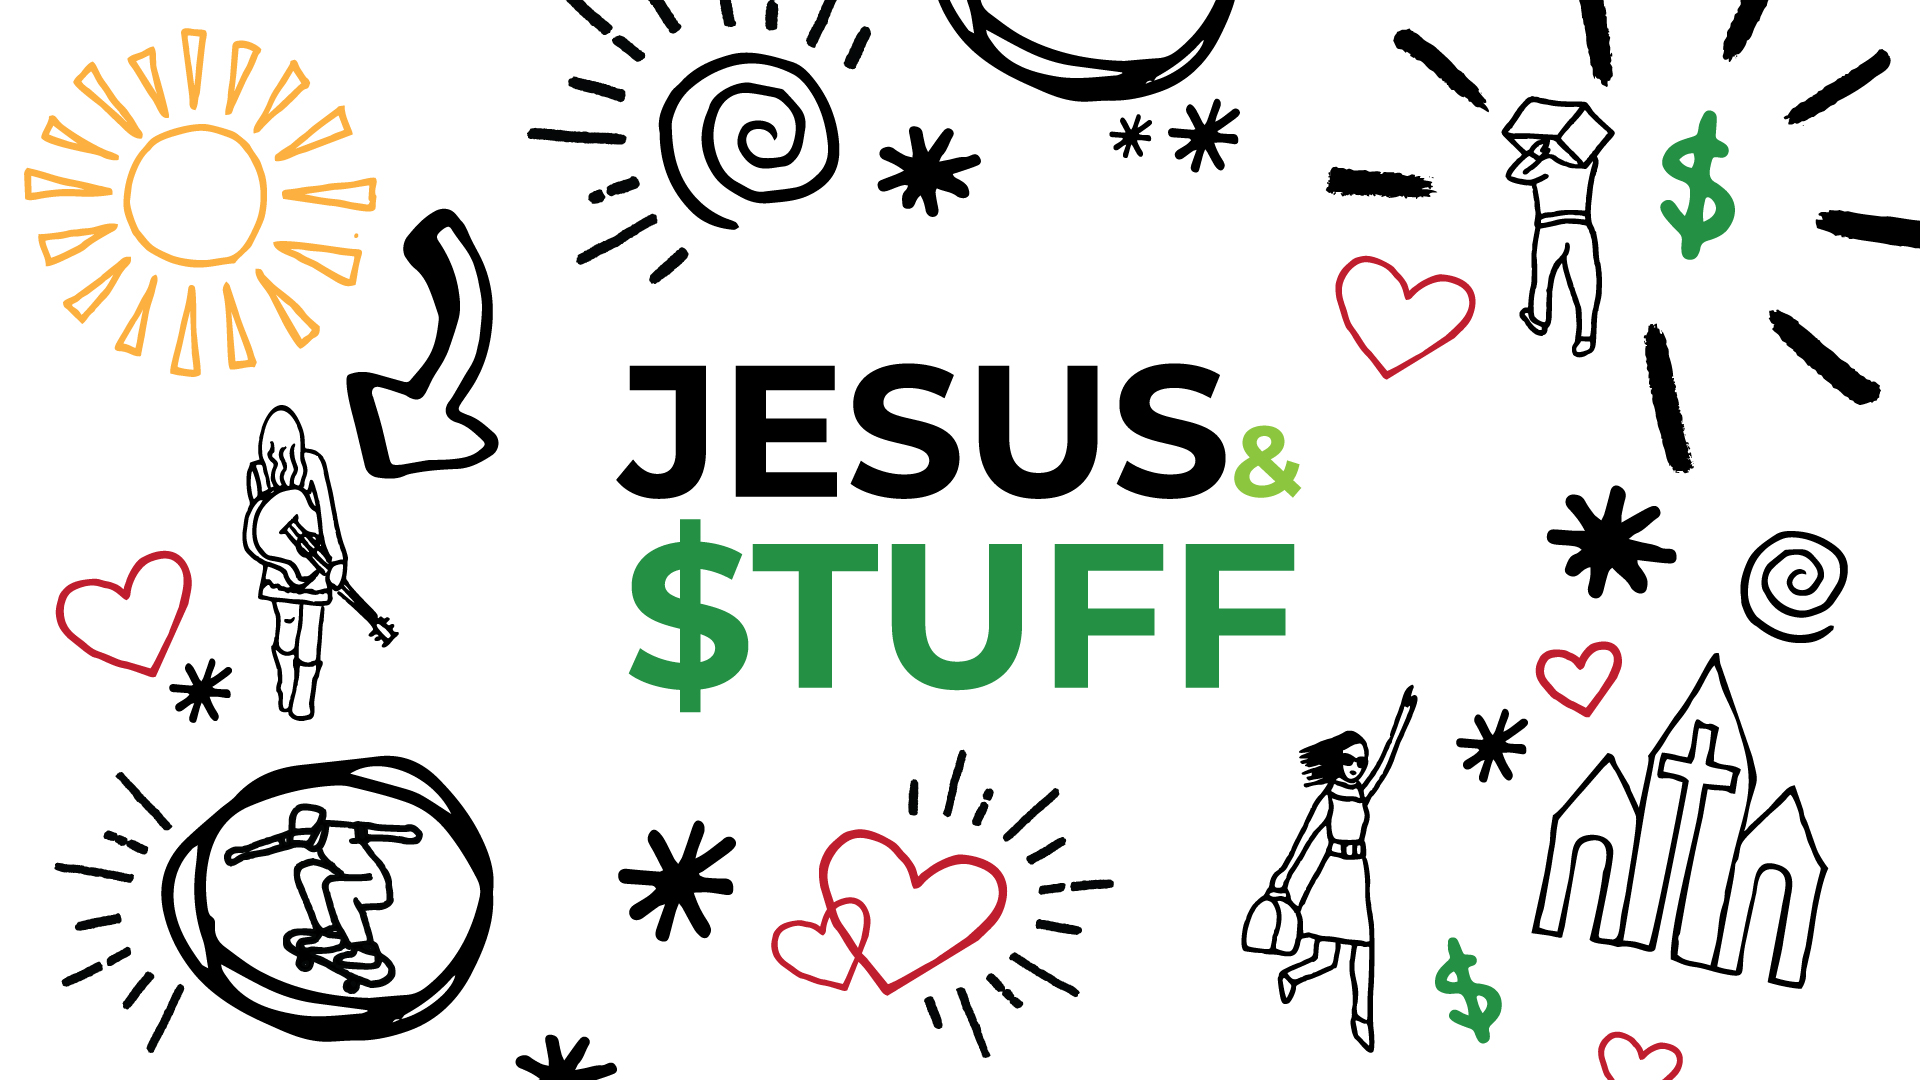 Jesus & $tuff - Part II